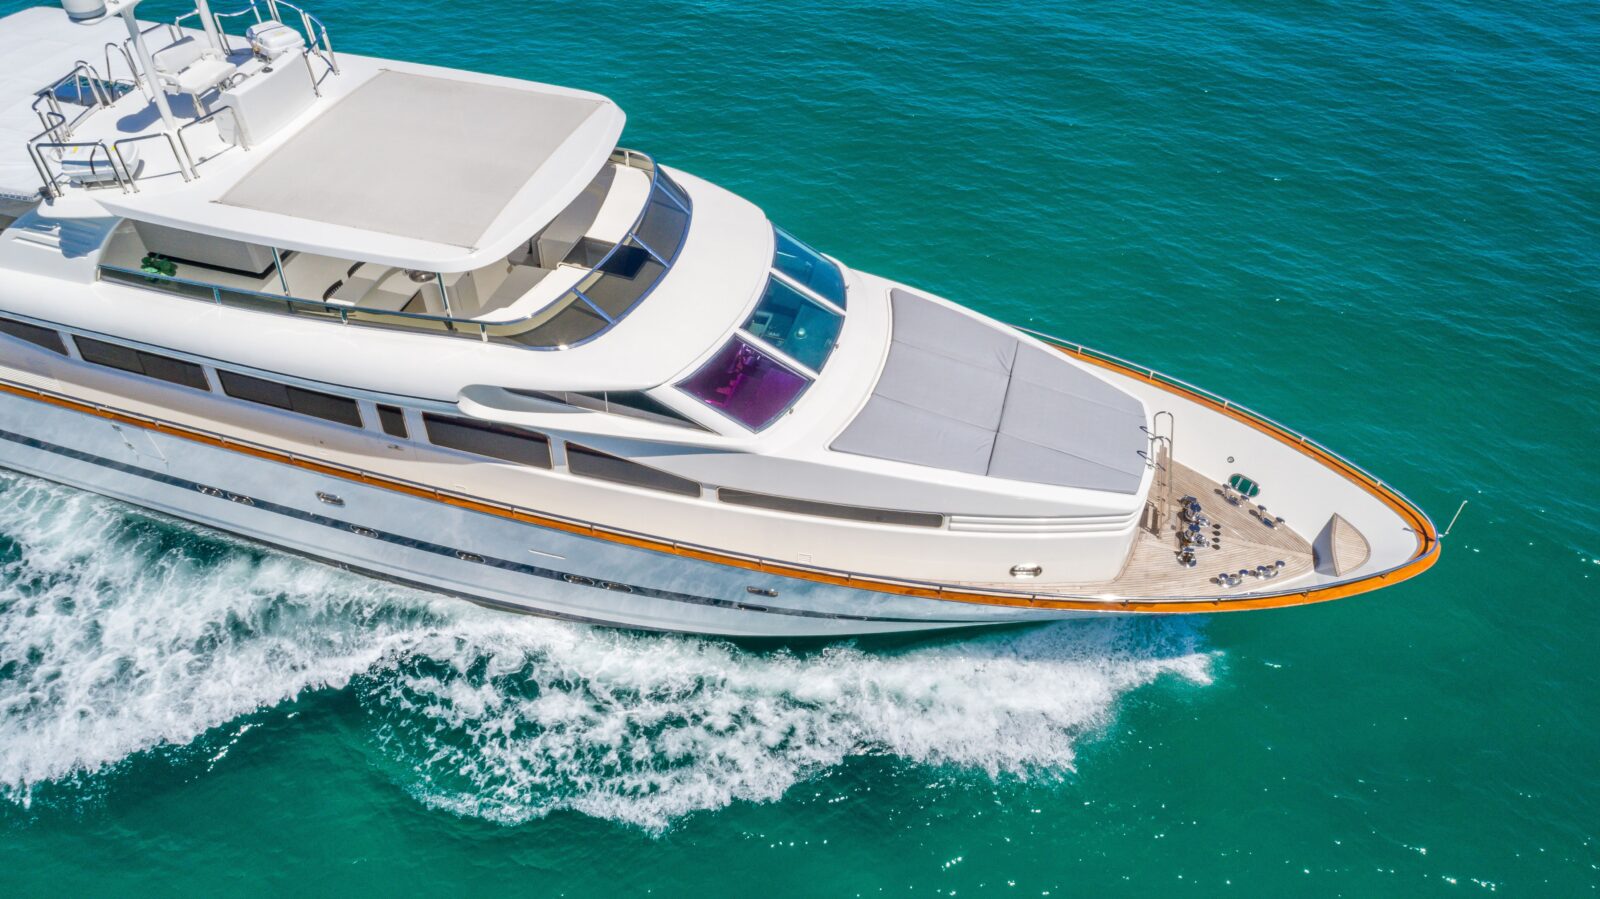 realship yacht rentals price